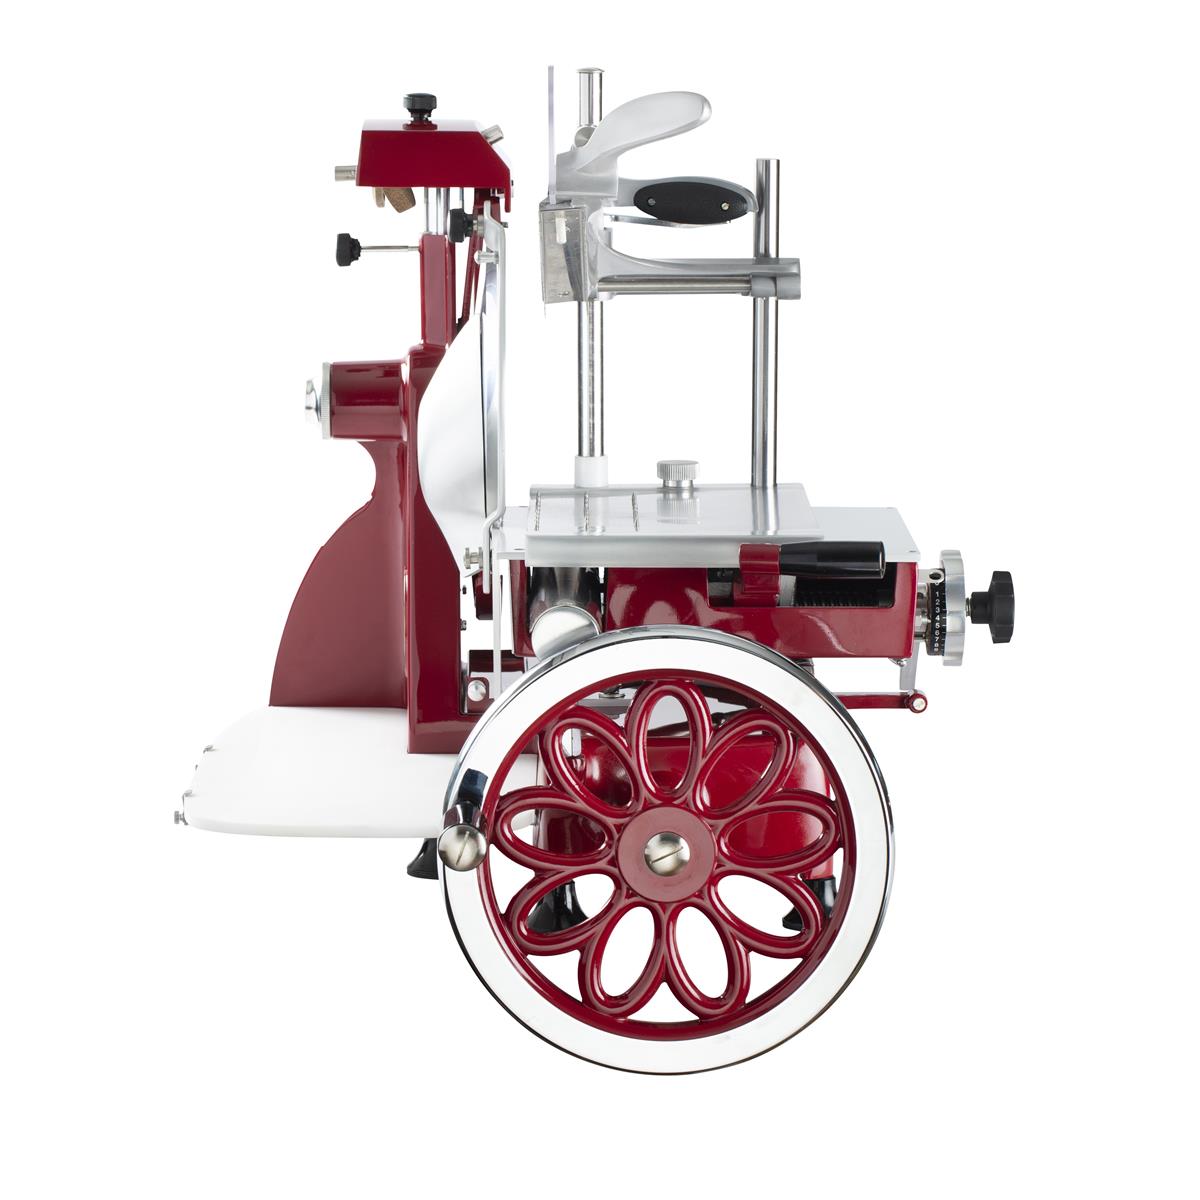 flywheel slicer 300 vo standard with fiorato flywheel - red